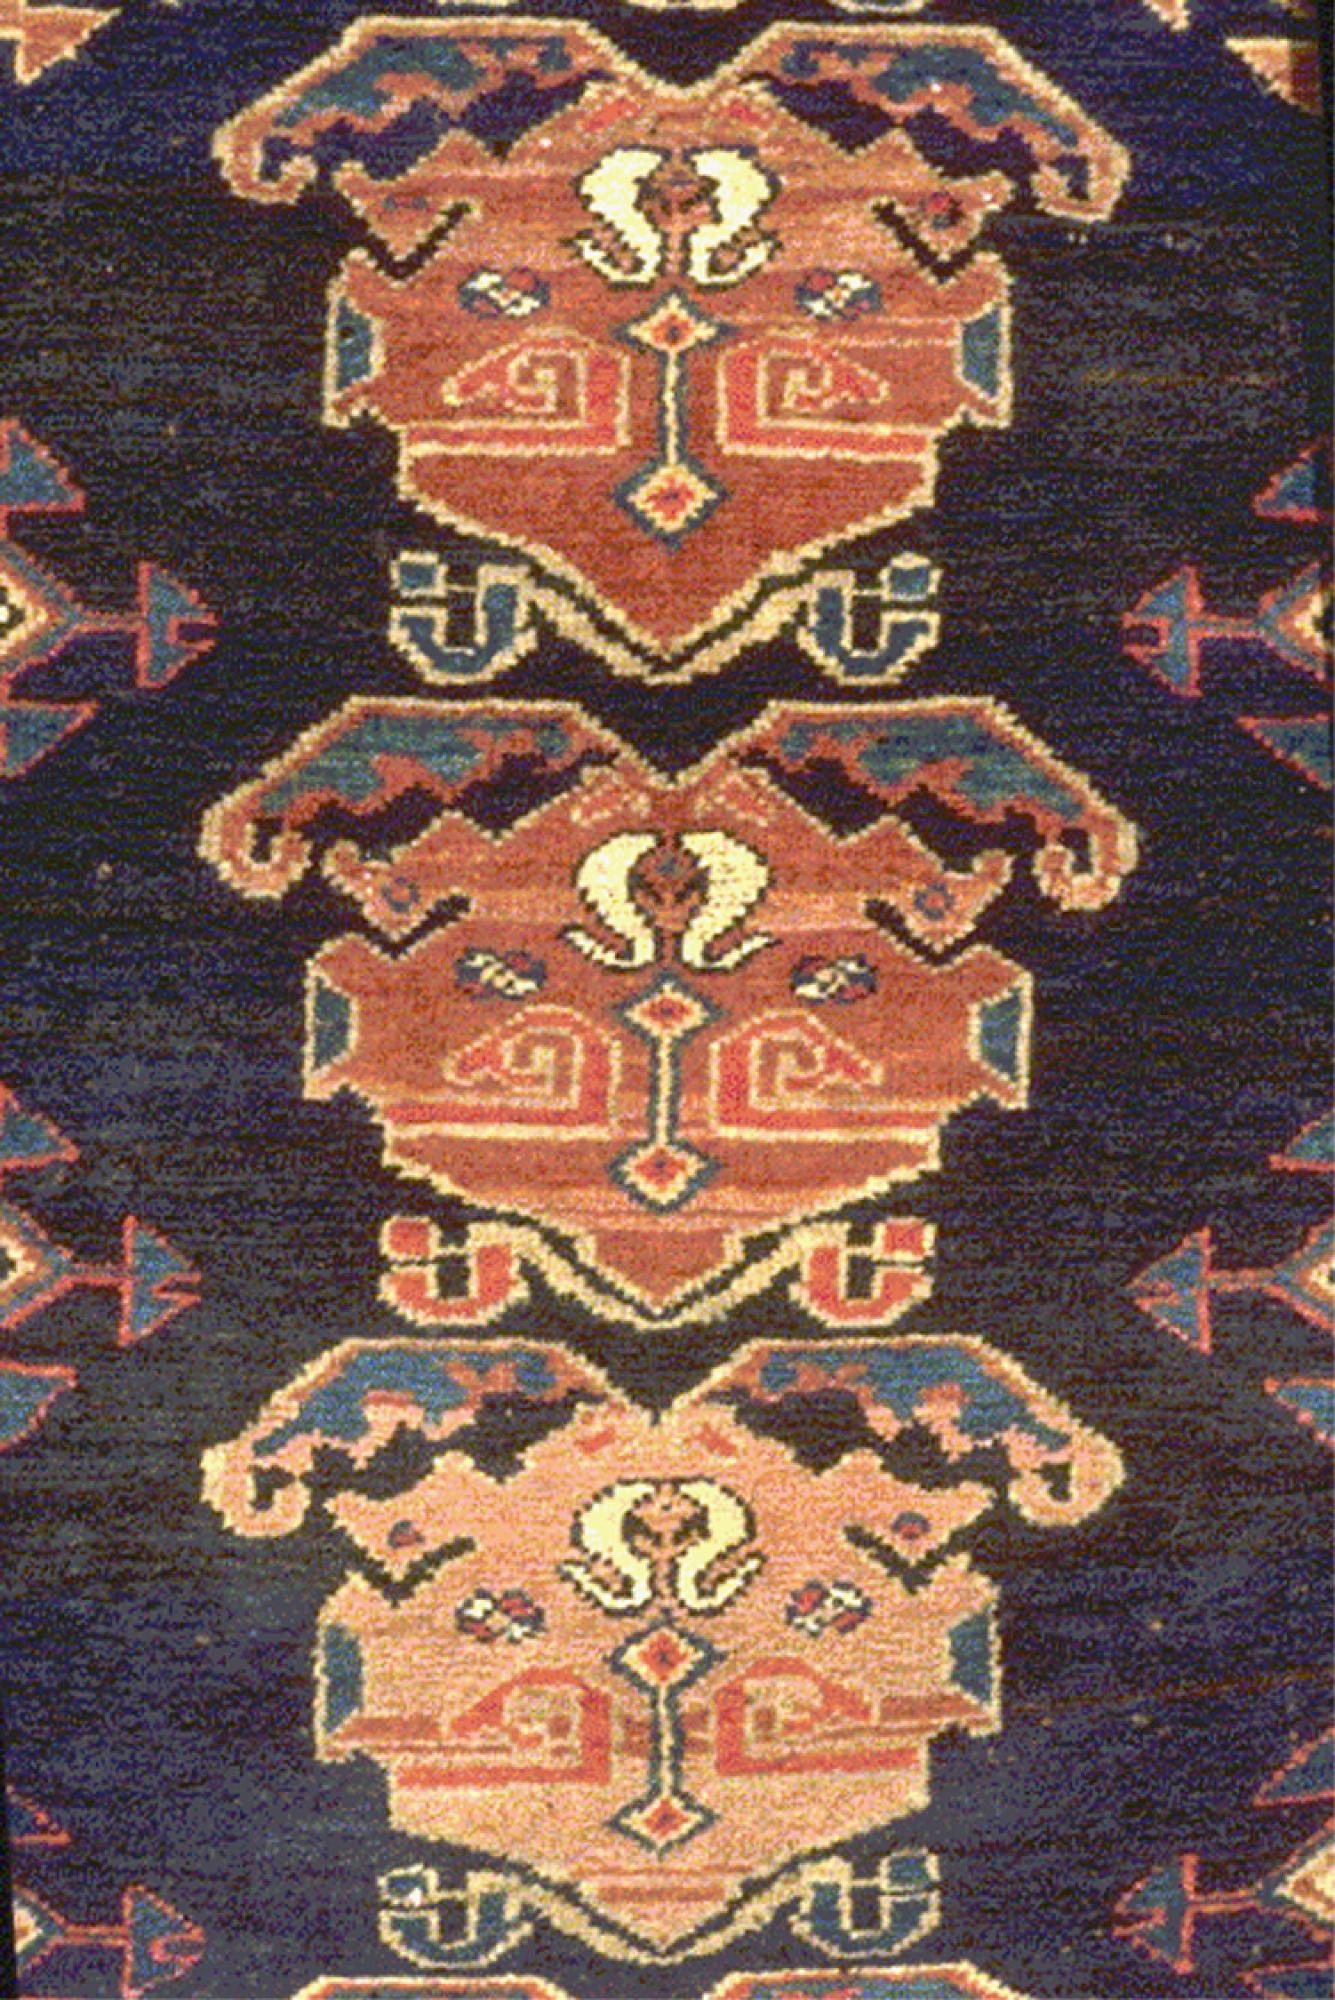 Garden vista rugs - Sale, expertise, maintenance, repair of original and rare oriental rugs